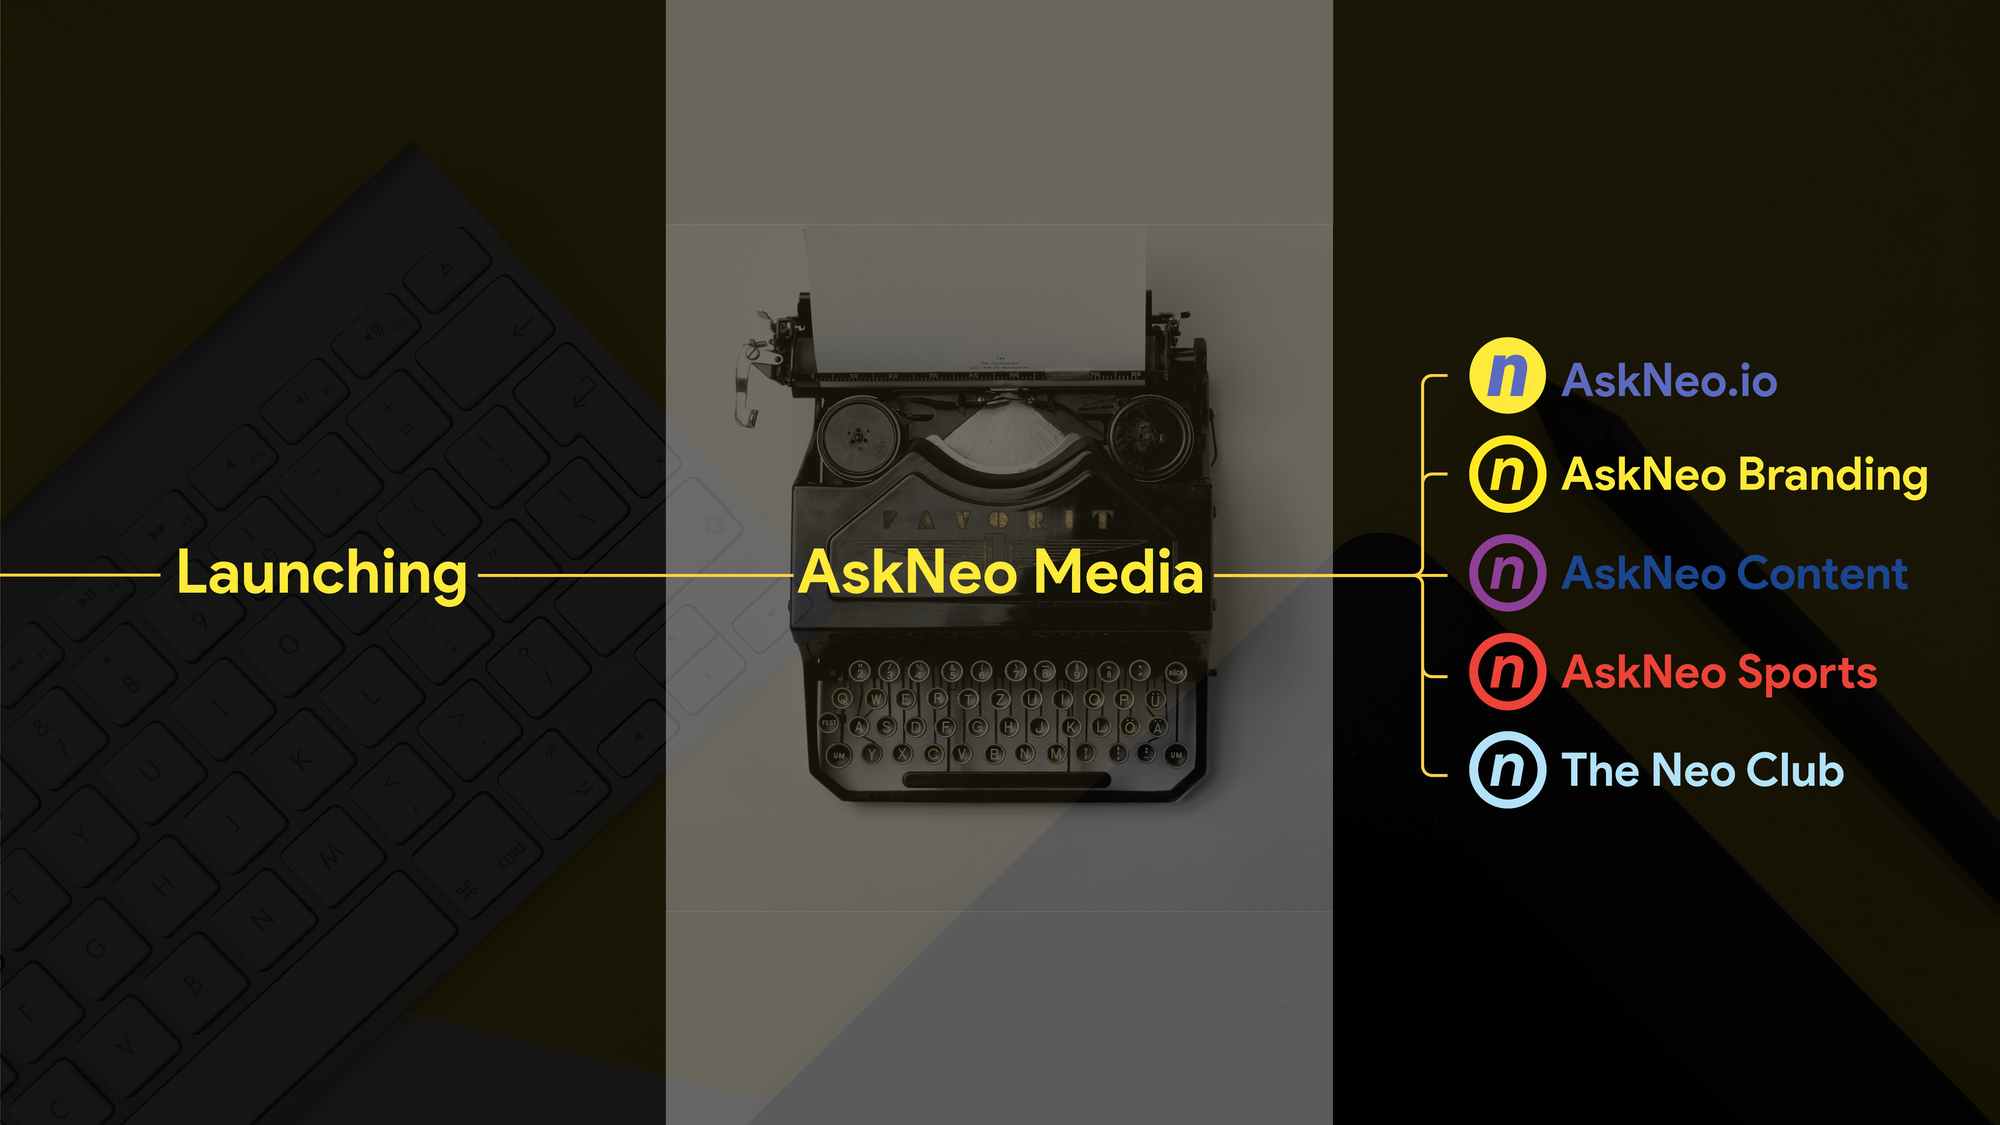 Launching AskNeo Media!